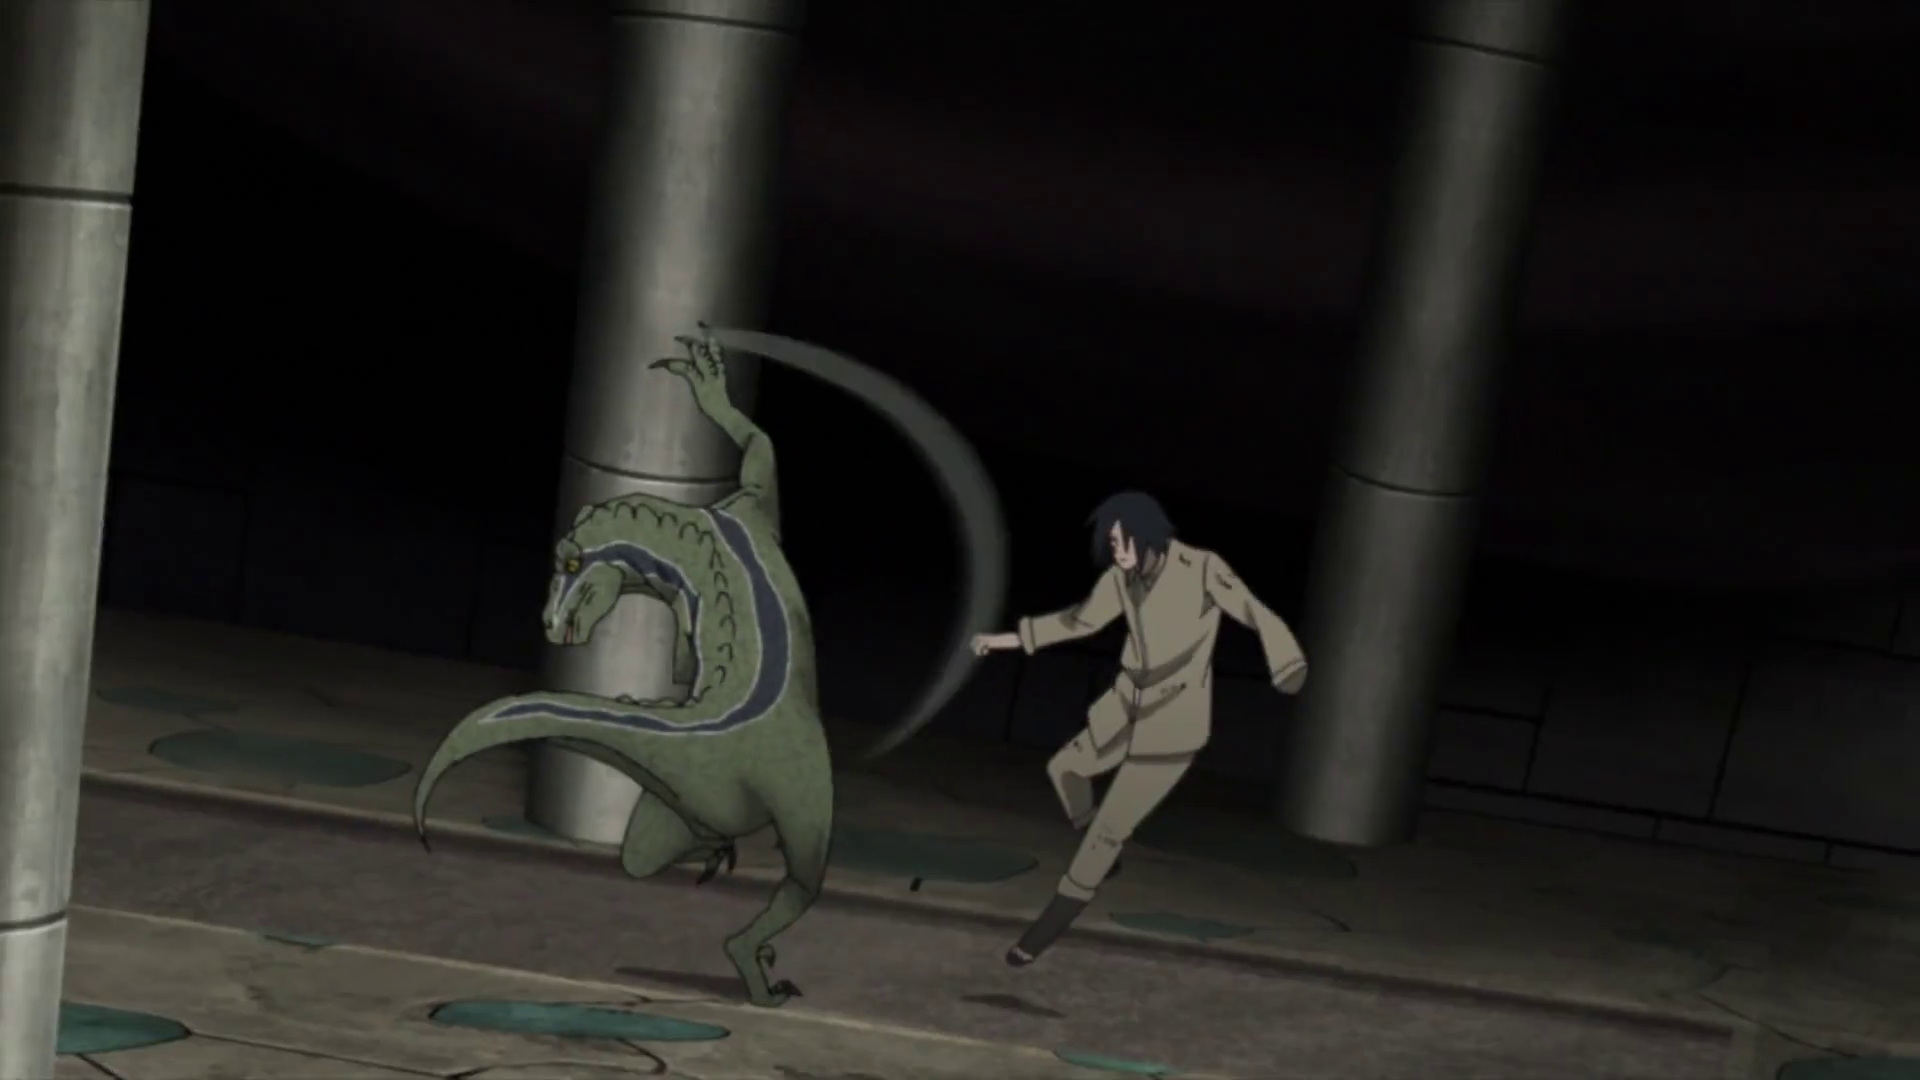 Boruto episode 282: Sasuke Retsuden arc begins, Sasuke encounters